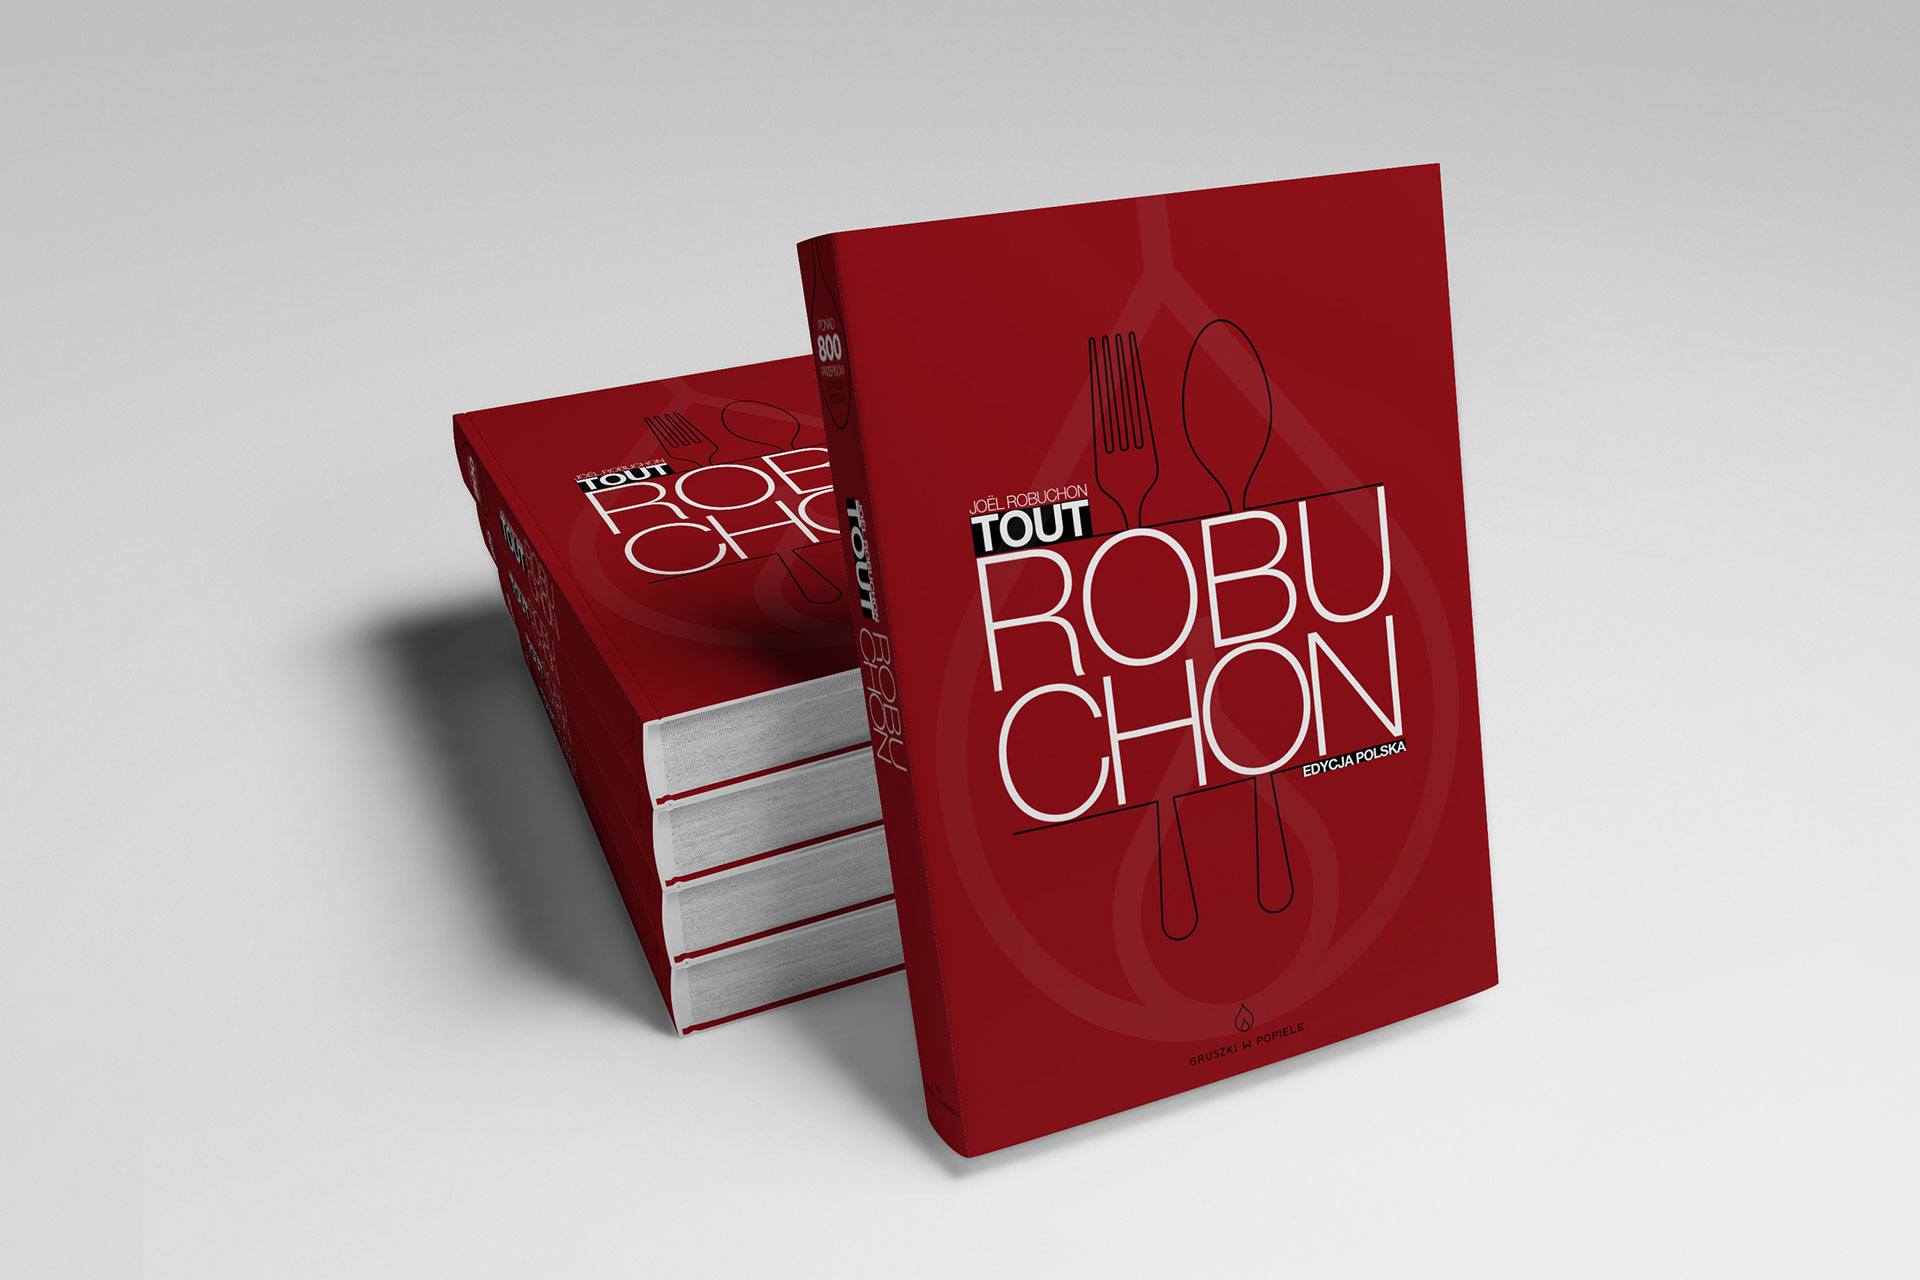 Książka Joëla Robuchona „Tout Robuchon” – w polskiej wersji